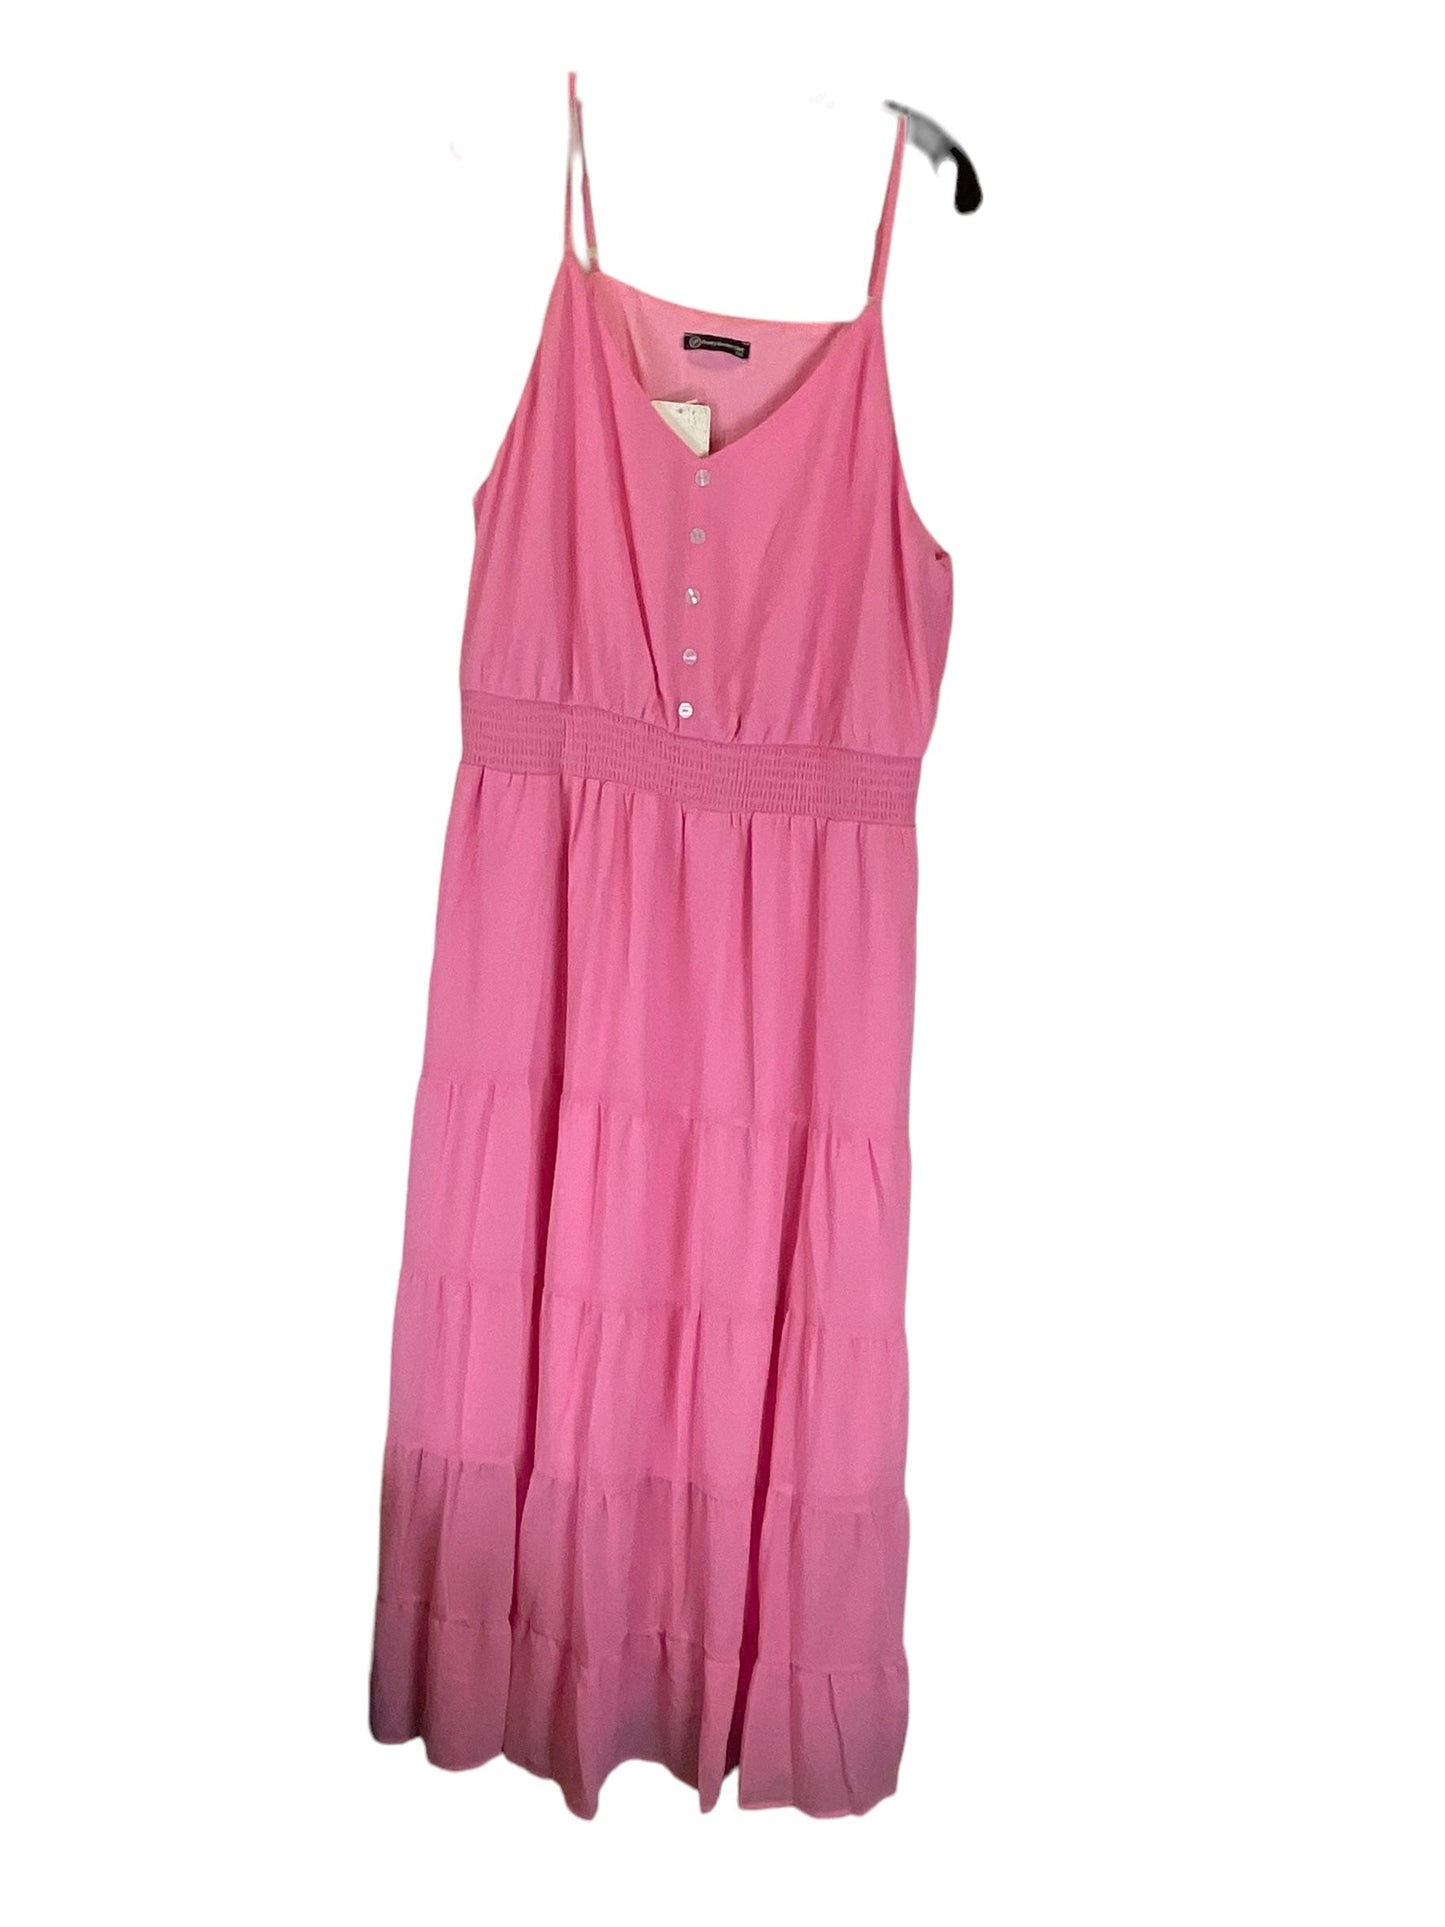 Pink Dress Casual Maxi Clothes Mentor, Size Xxl